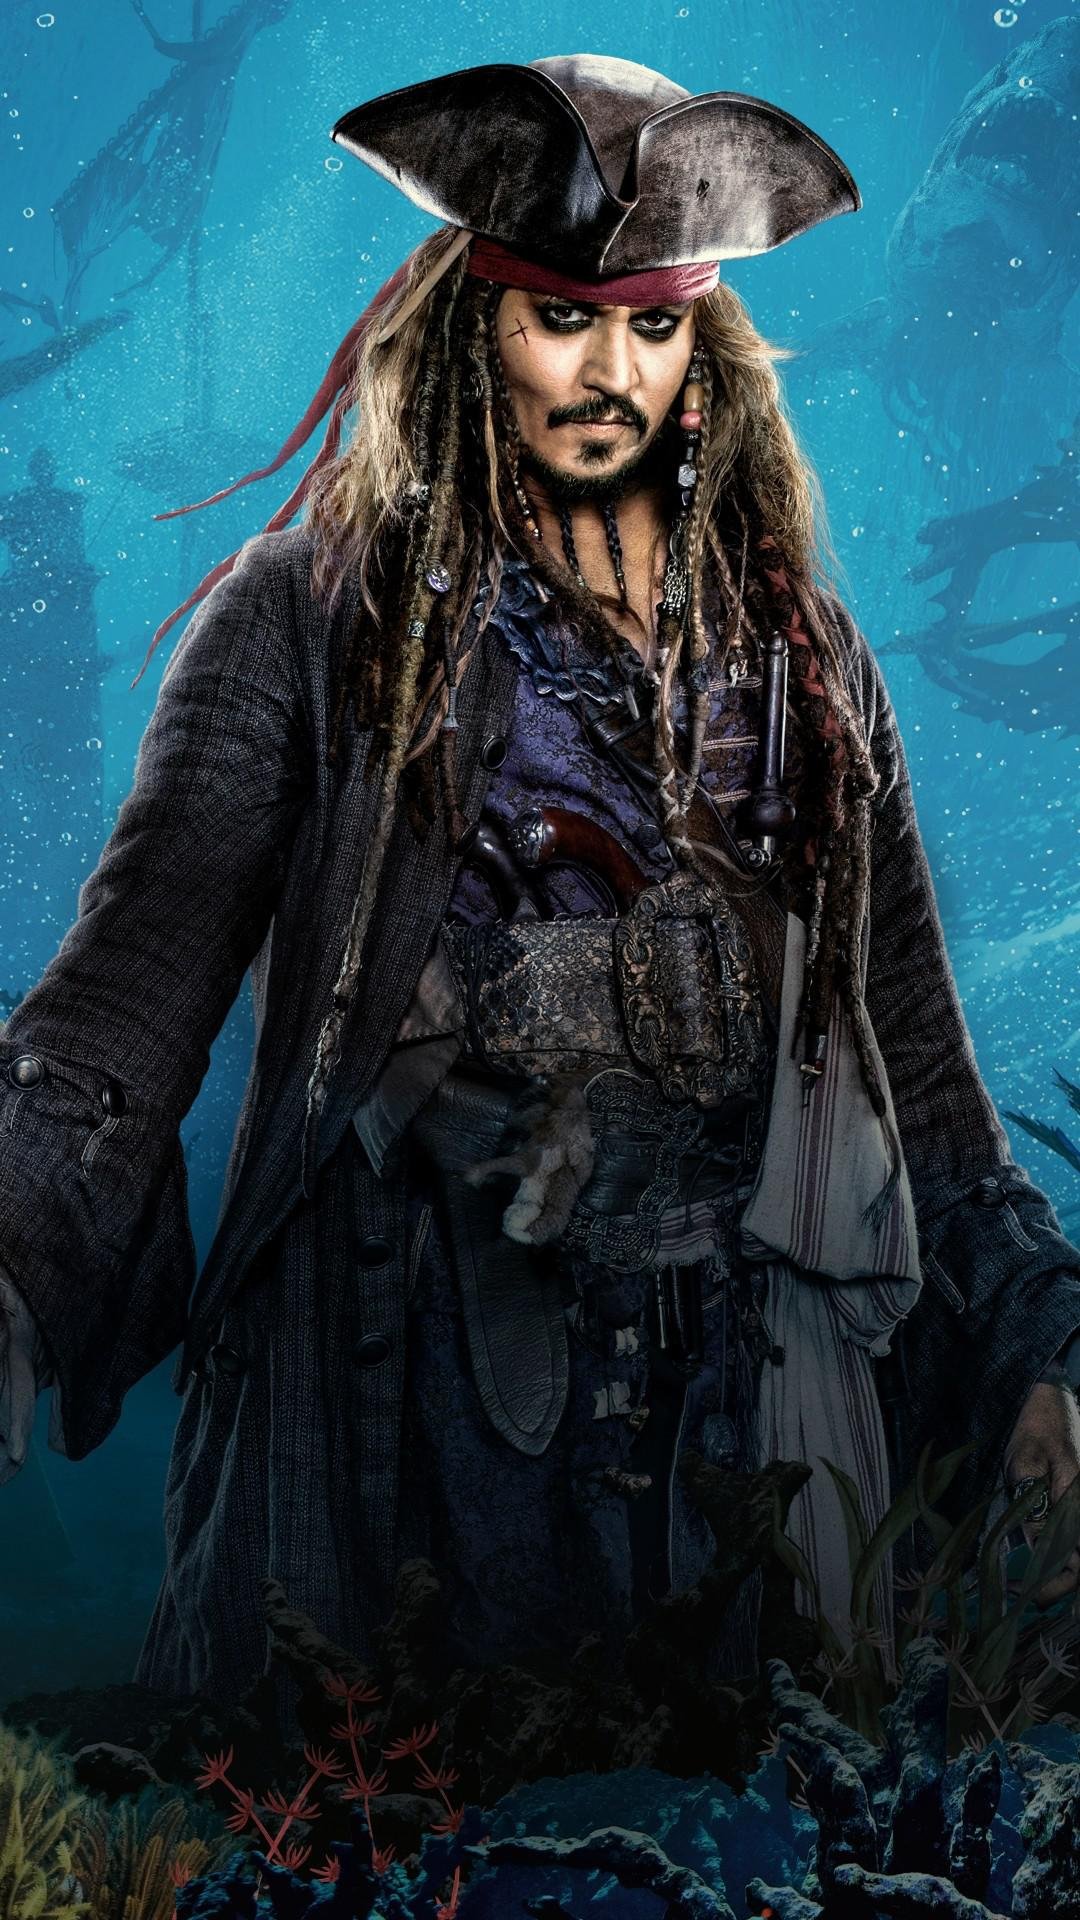 Pirates of the Caribbean On strange tides 4K wallpaper download